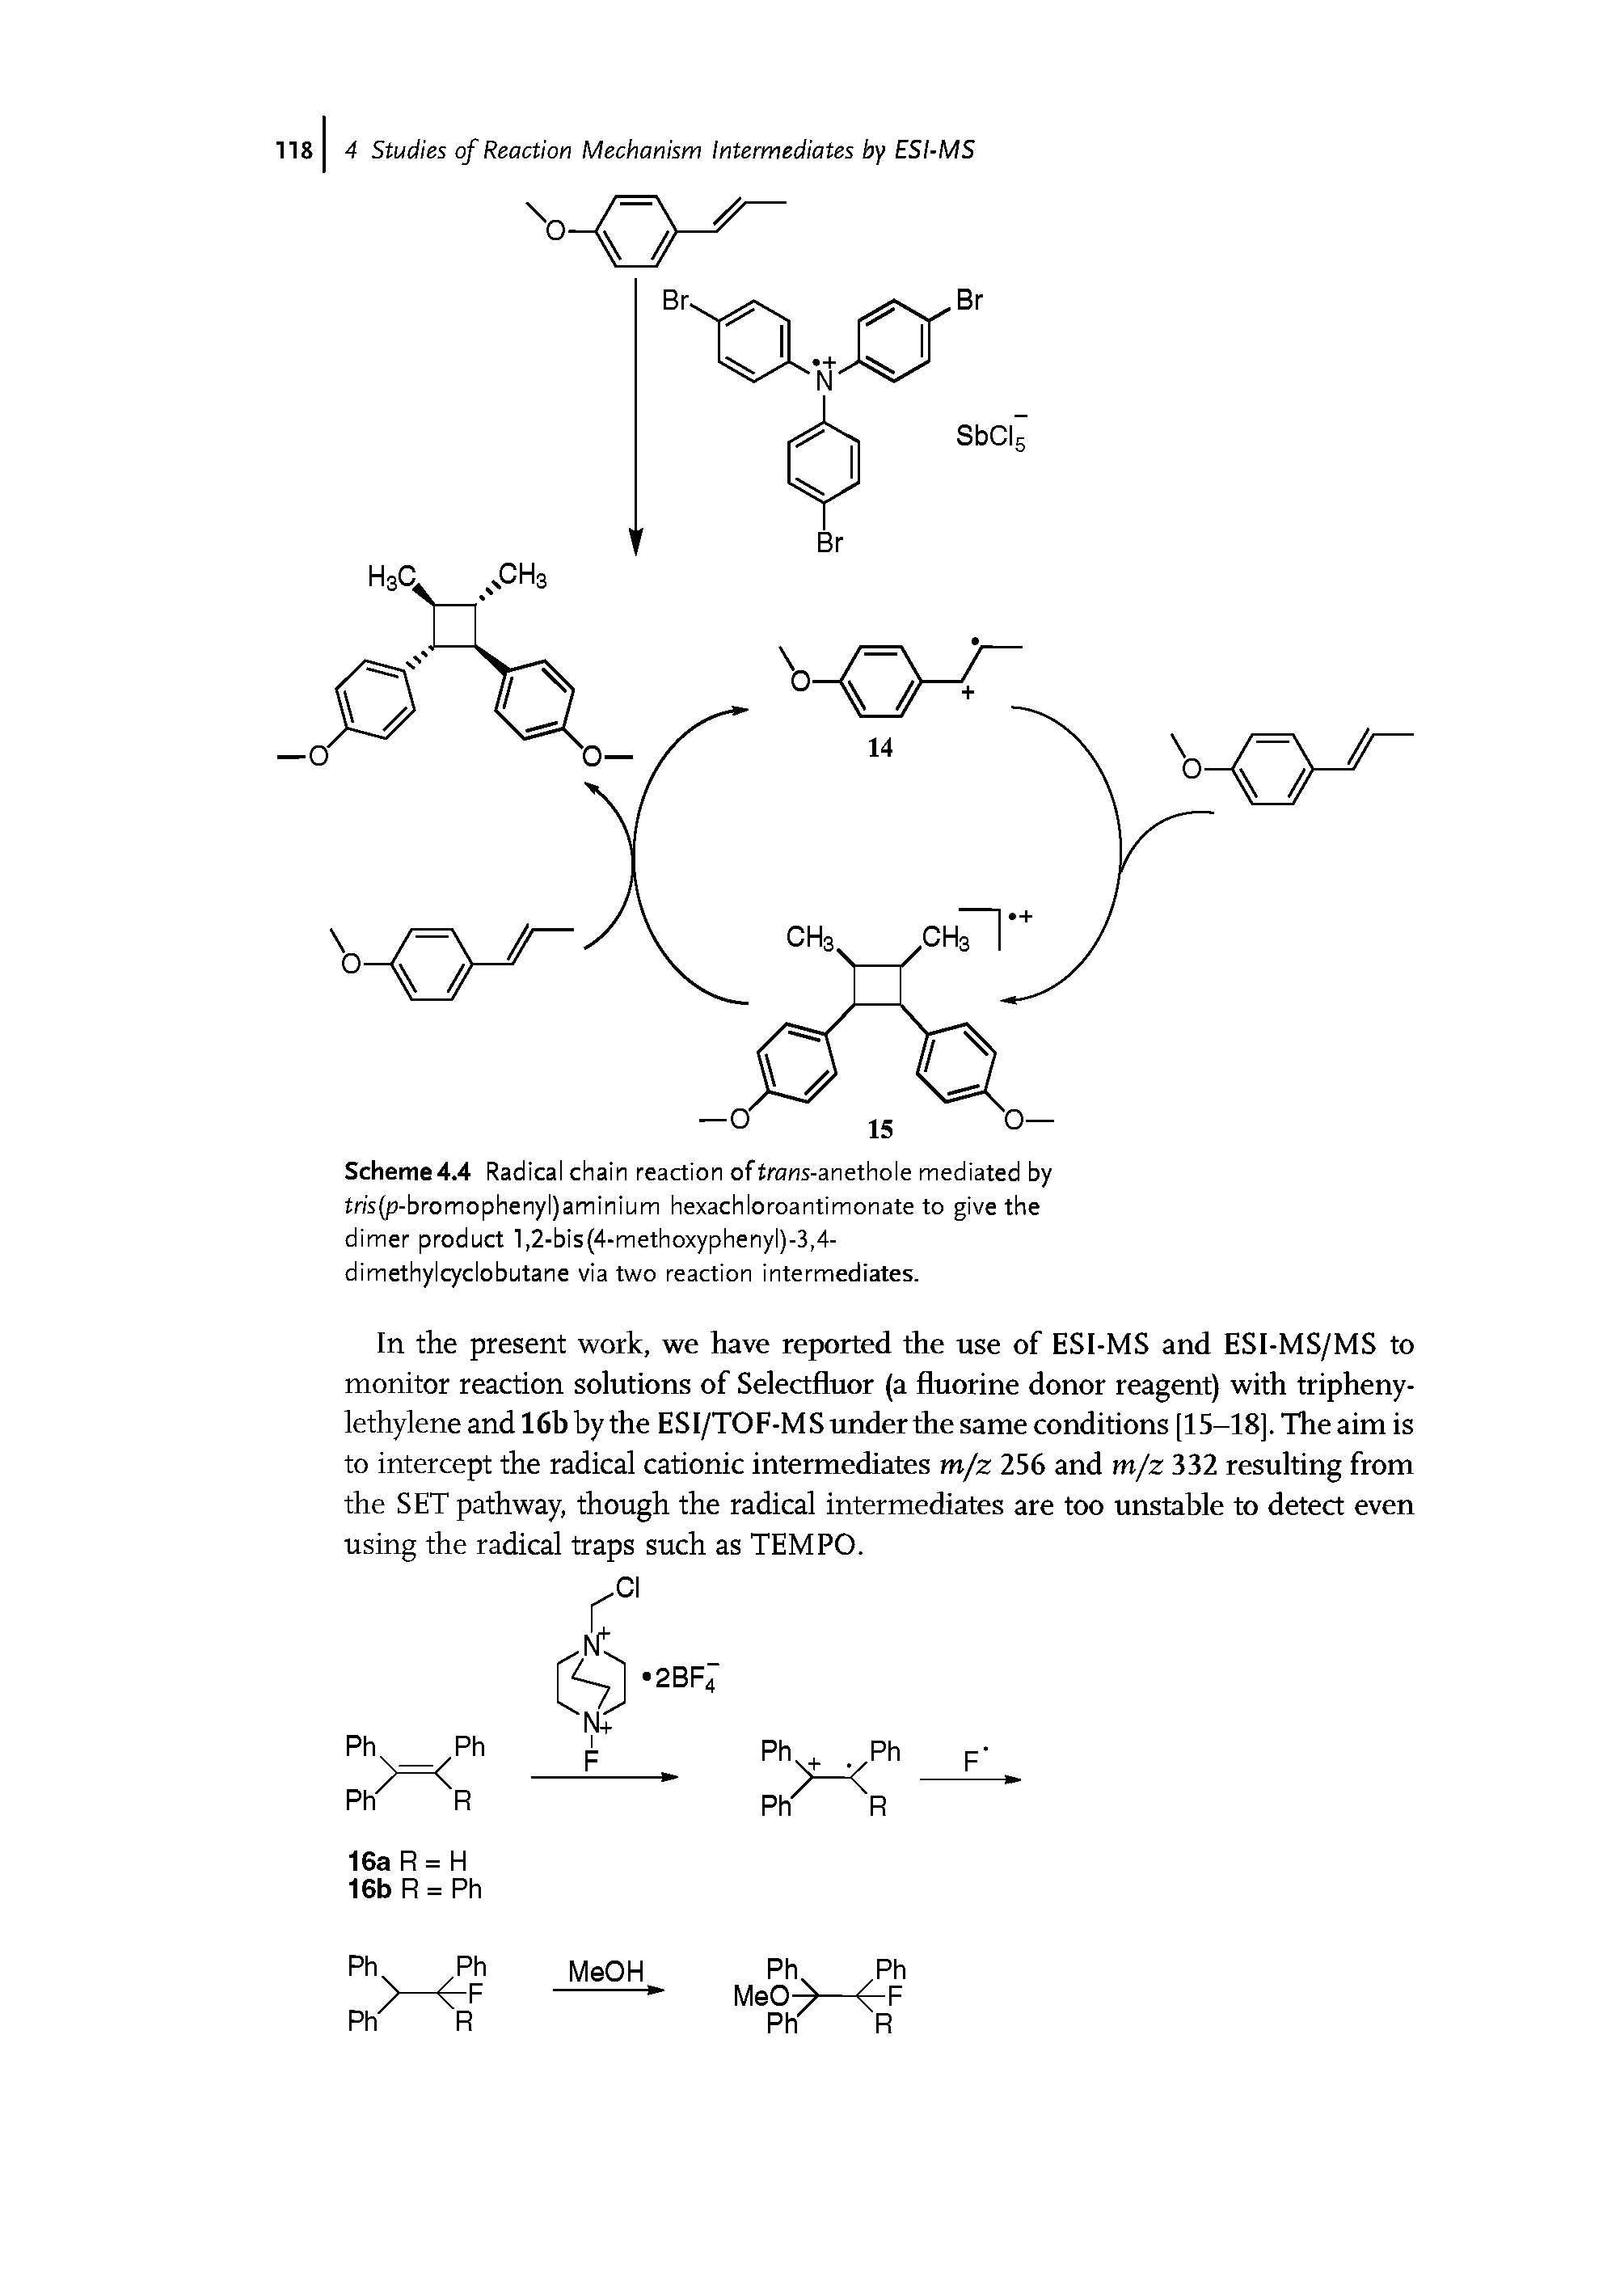 Scheme 4.4 Radical chain reaction of trans-anethole mediated by tris(p-bromophenyl)aminium hexachloroantimonate to give the dimer product 1,2-bis(4-methoxyphenyl)-3,4-dimethylcyclobutane via two reaction intermediates.